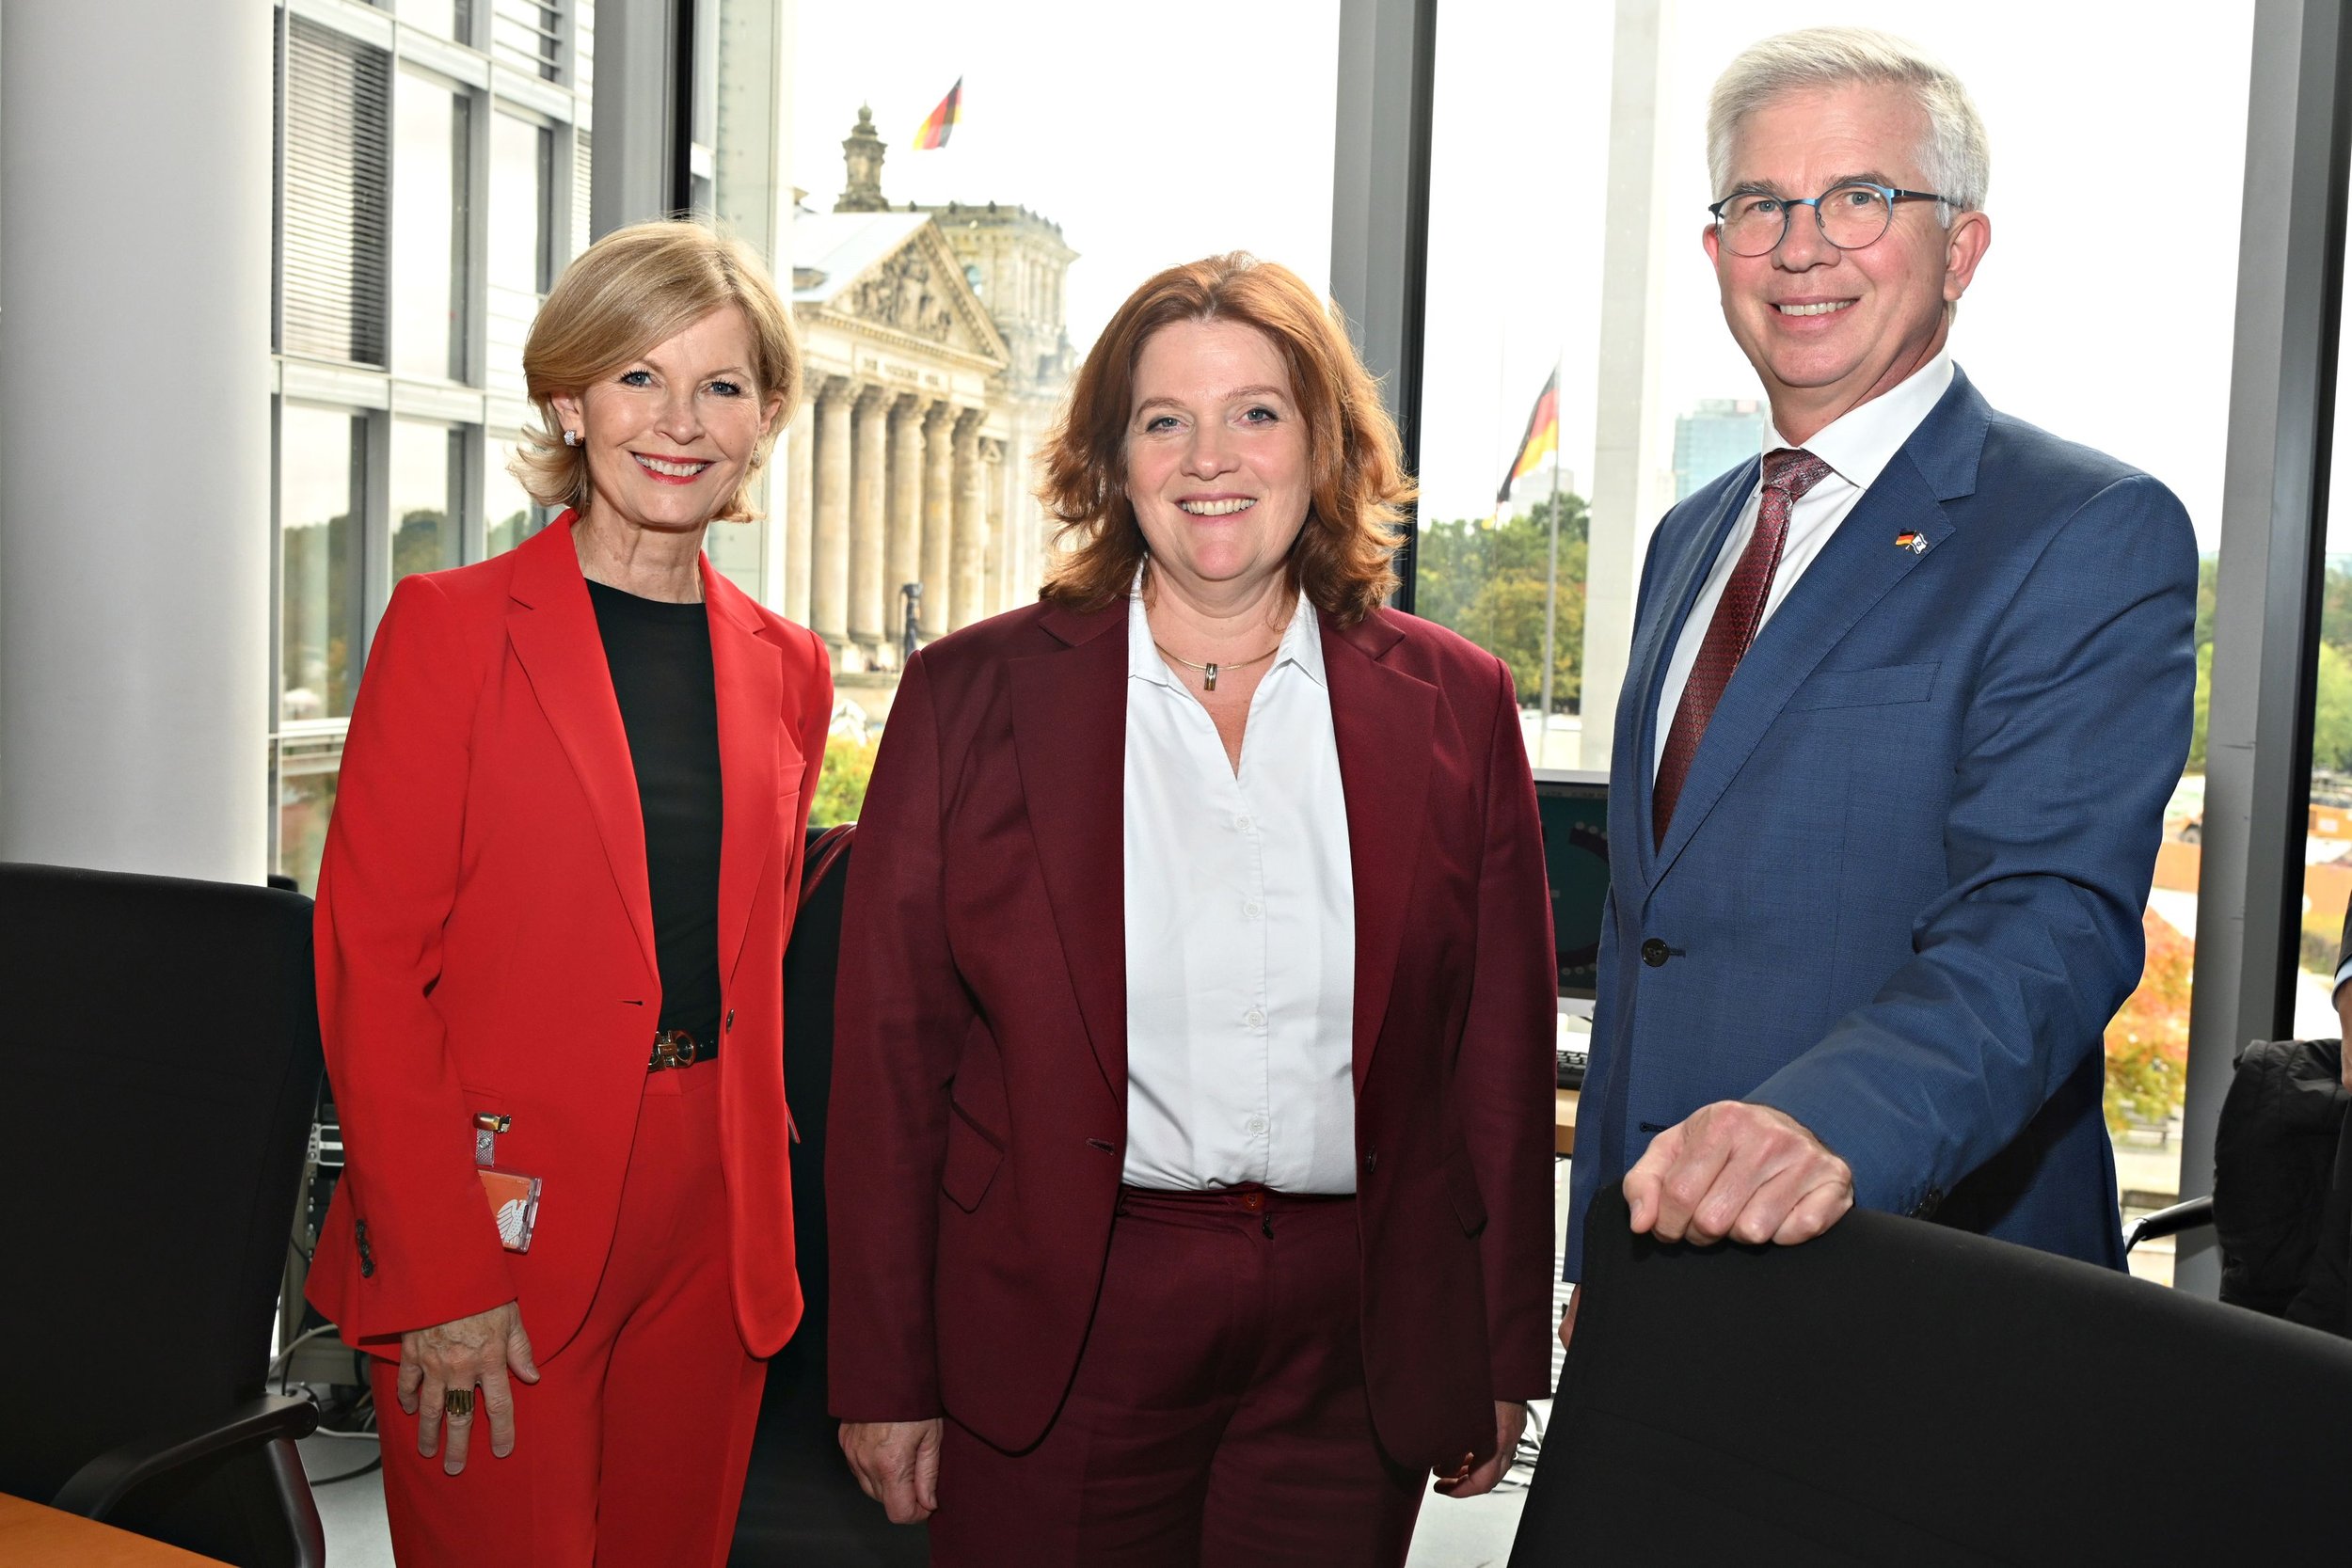  From left: Nancy Ziuzin Schlegel (Lockheed Martin), Sandra Weeser, MP (German Bundestag), Prof. Dr. Andrew Ullmann, MP (German Bundestag)  